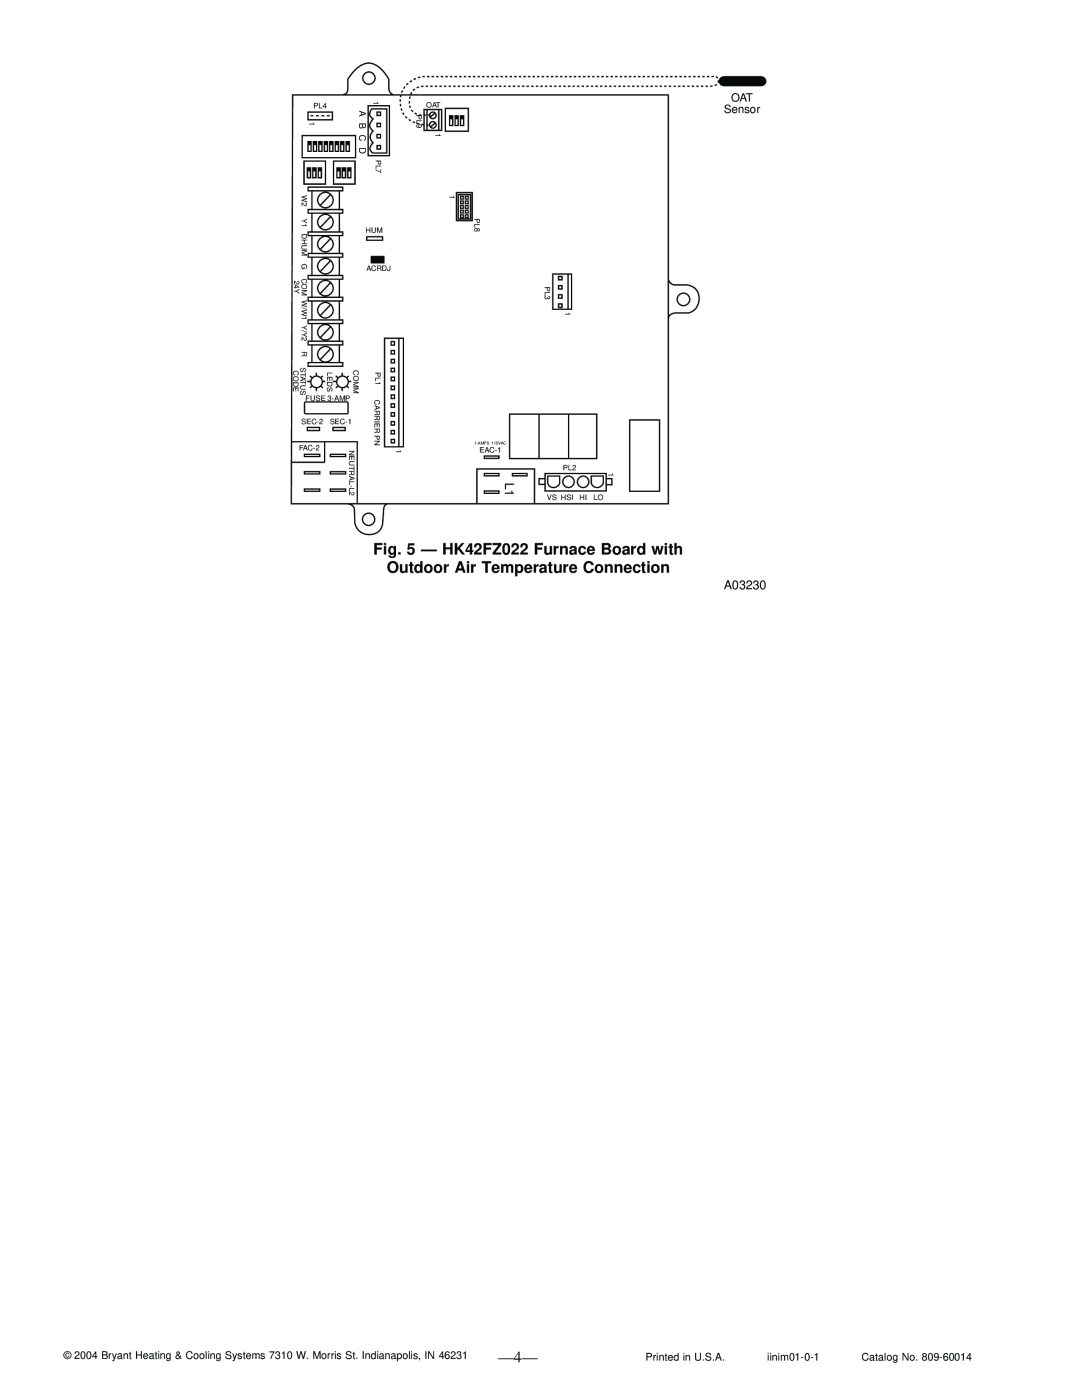 Bryant SYSTXBBNIM01 instruction manual OAT Sensor, A03230, Printed in U.S.A, iinim01-0-1, Catalog No 